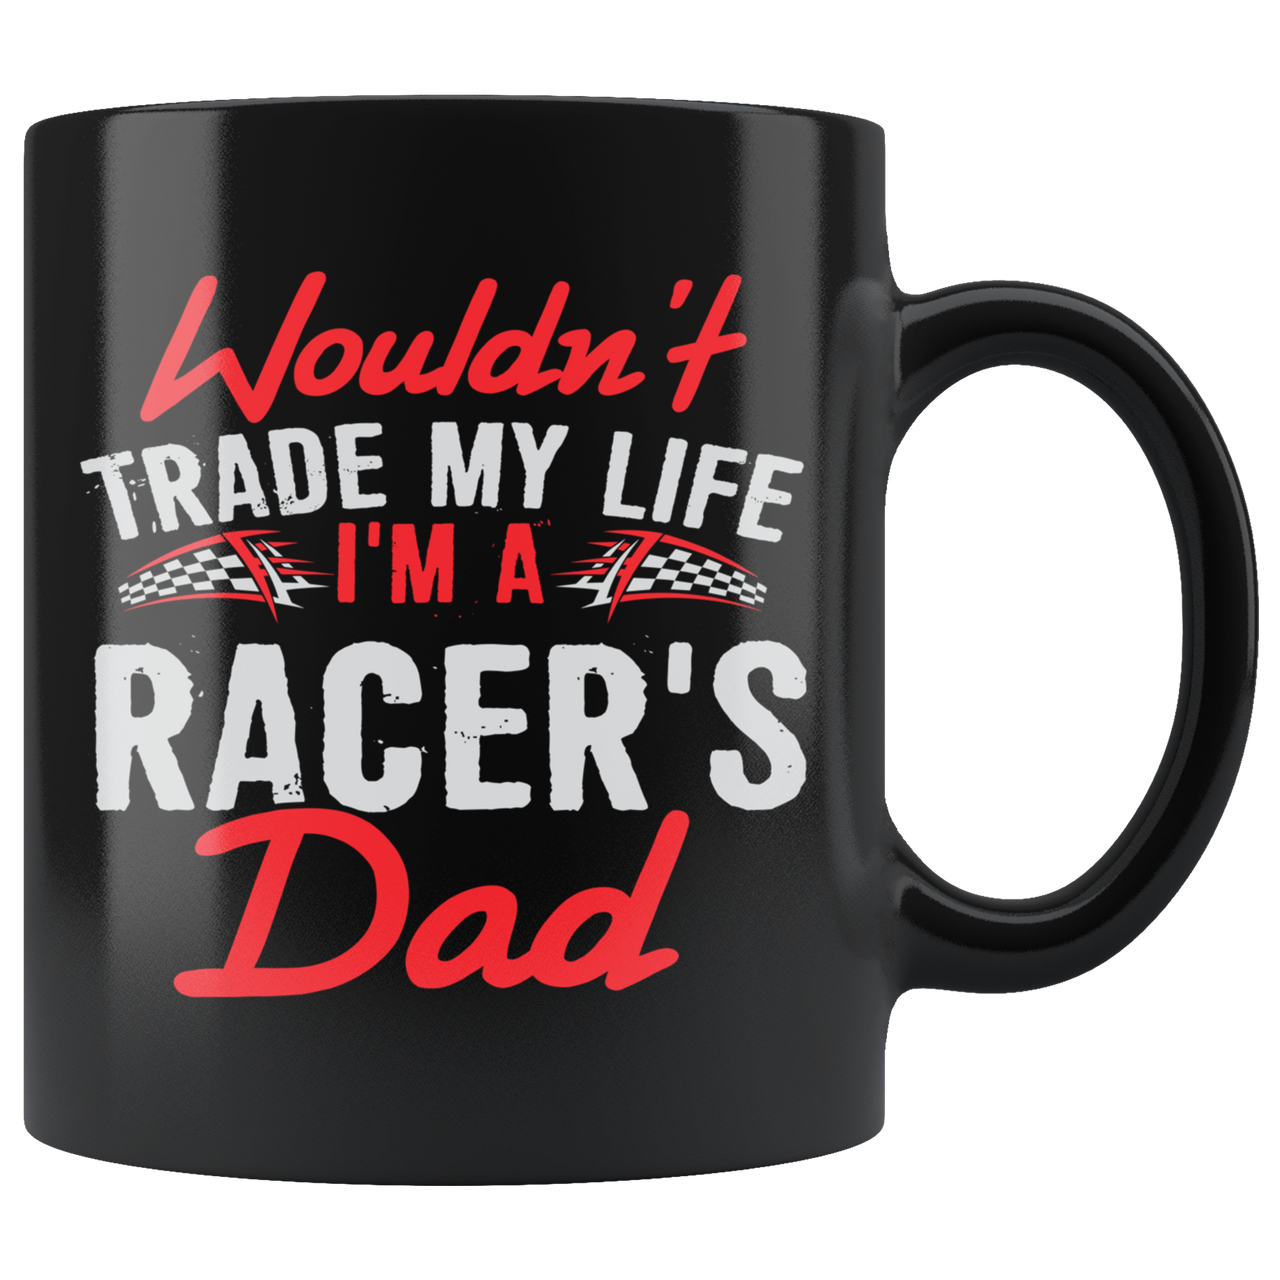 Wouldn't Trade My Life I'm A Racer's Dad Mug!